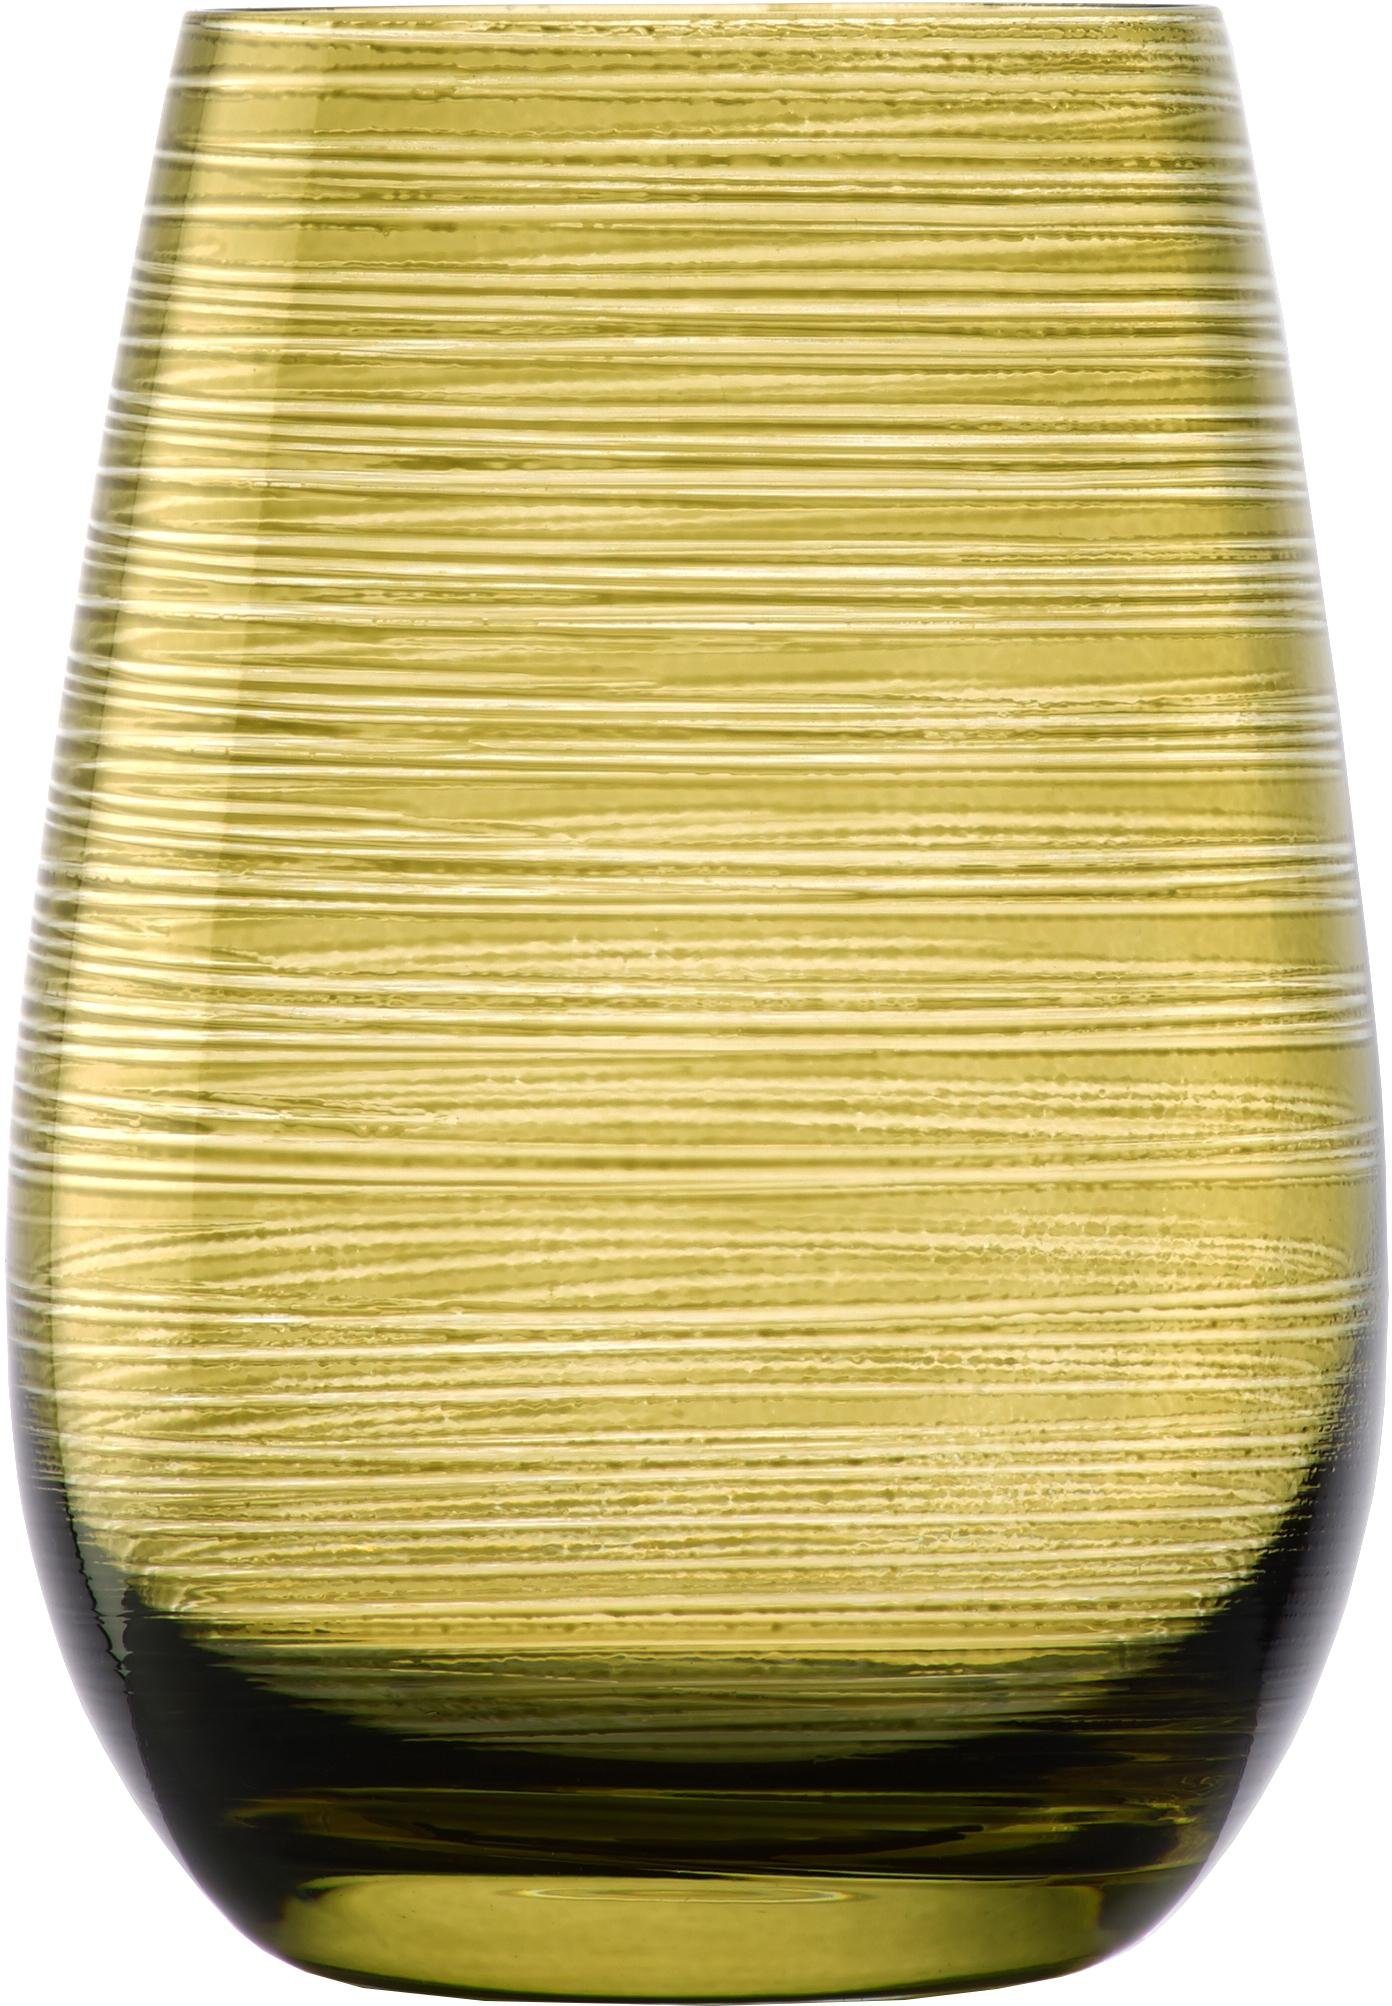 Stölzle Becher olivgrün 6-teilig TWISTER, Glas